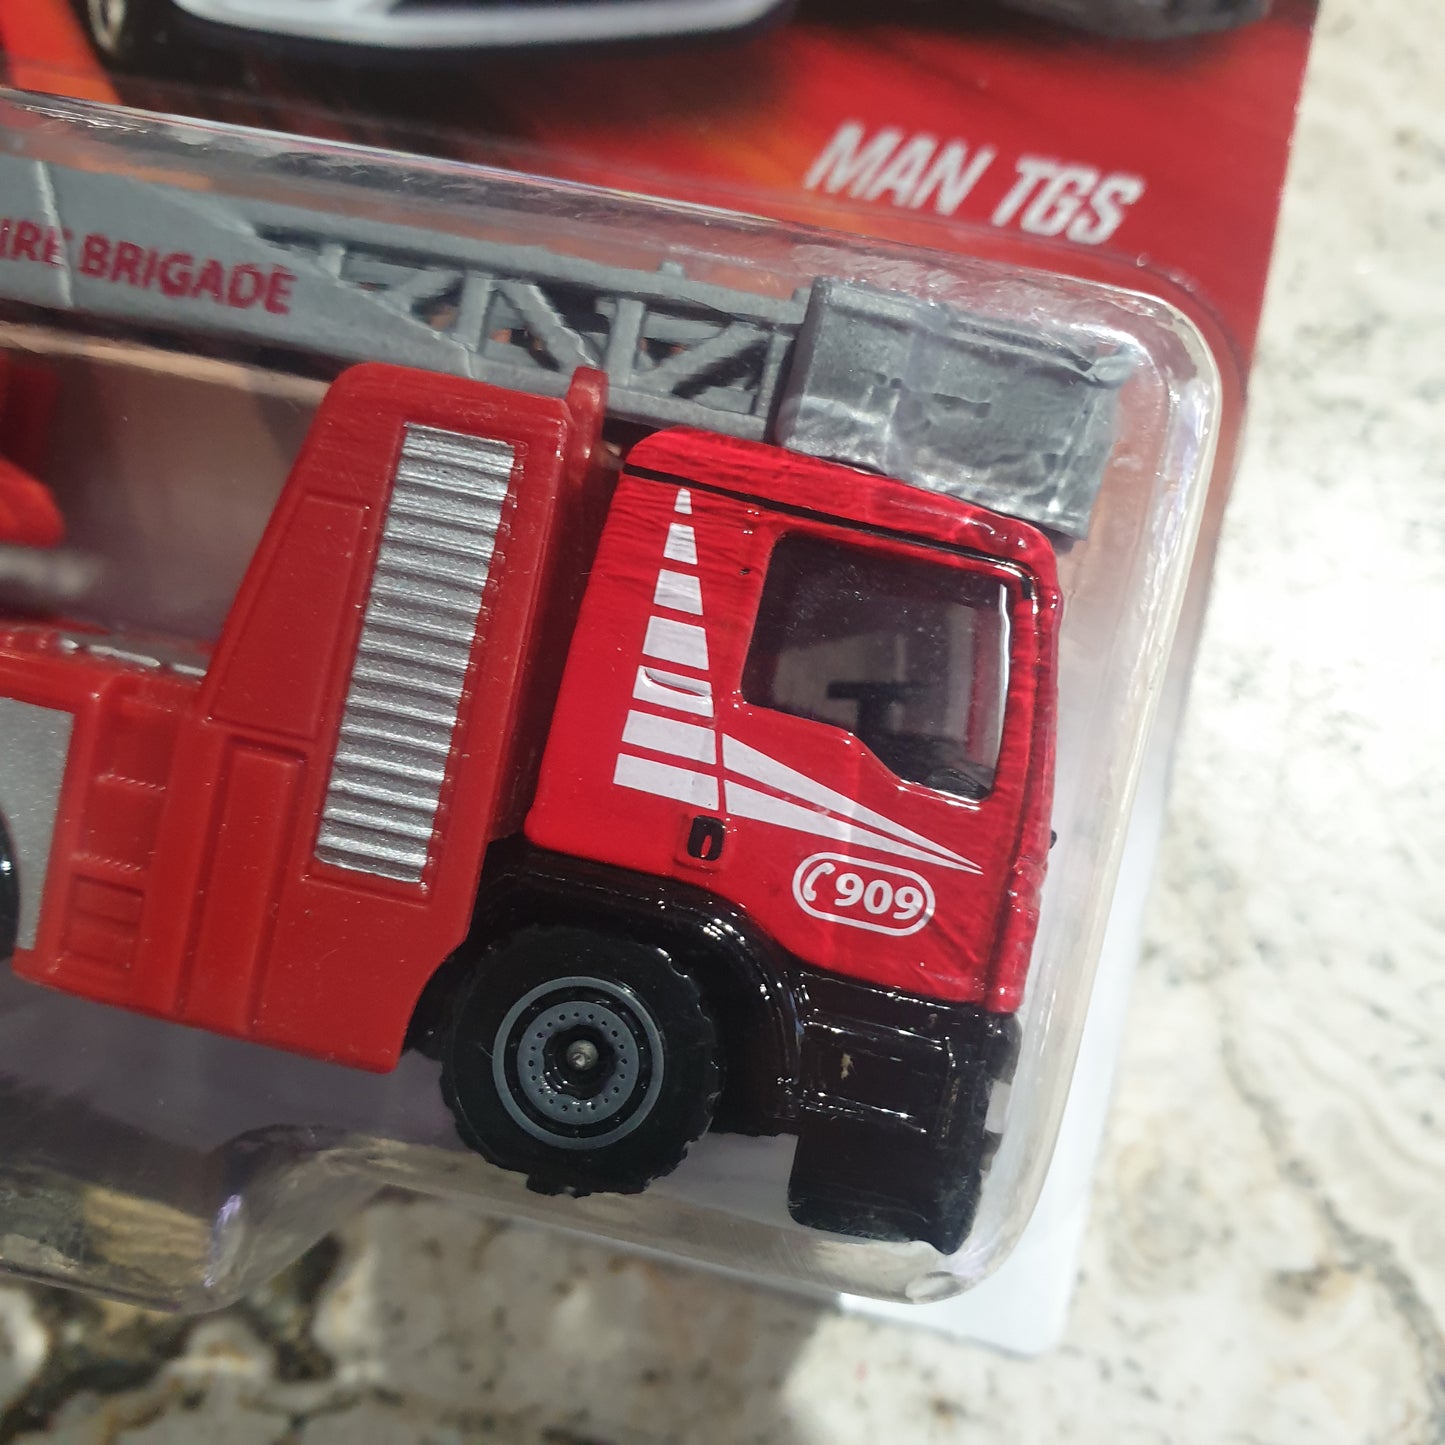 Majorette - SOS Cars - MAN TGS Fire Brigade (909) Truck Diecast Car